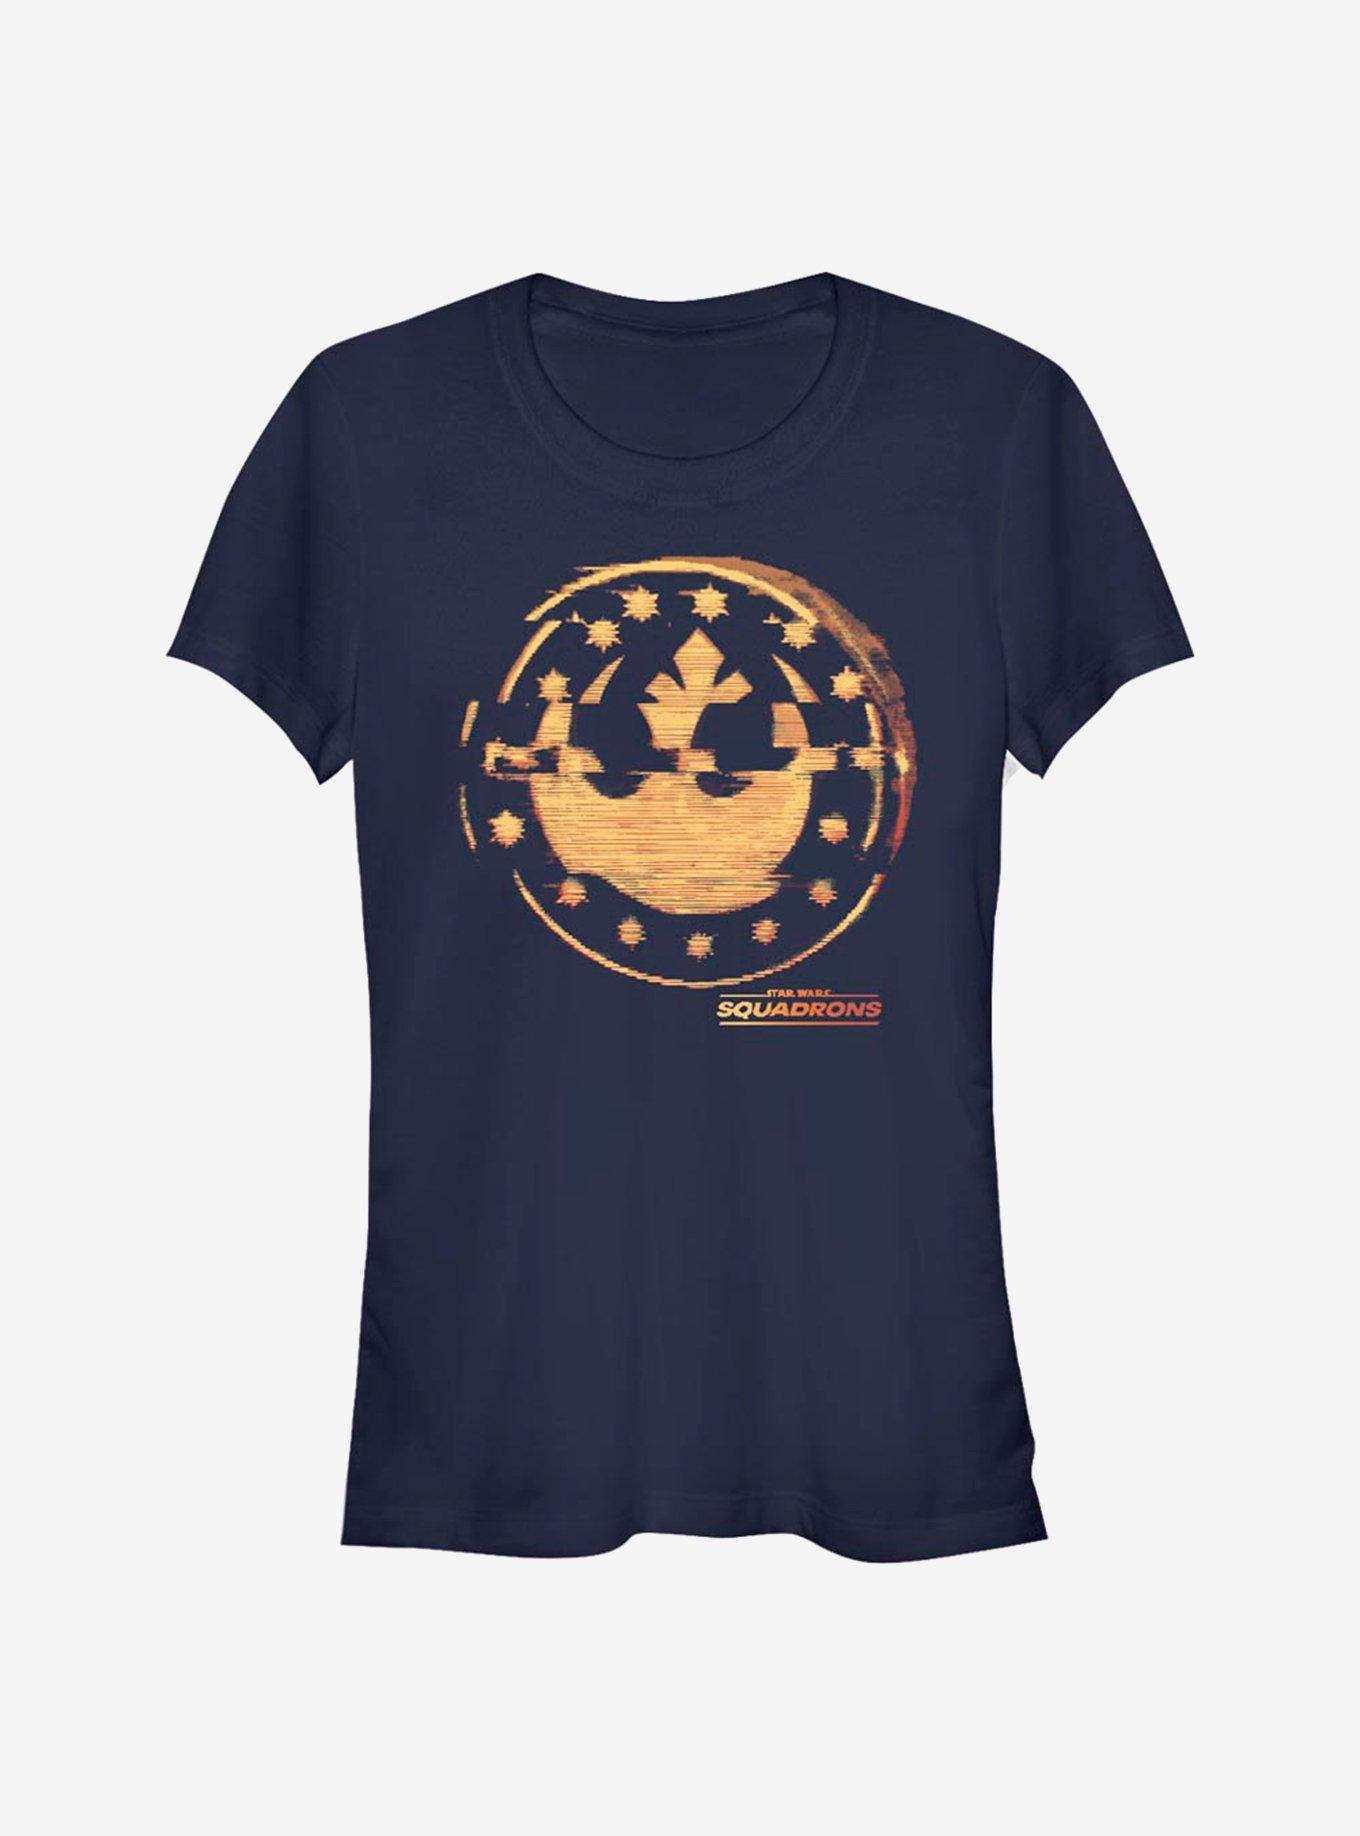 Star Wars Glitched Logo Girls T-Shirt, NAVY, hi-res